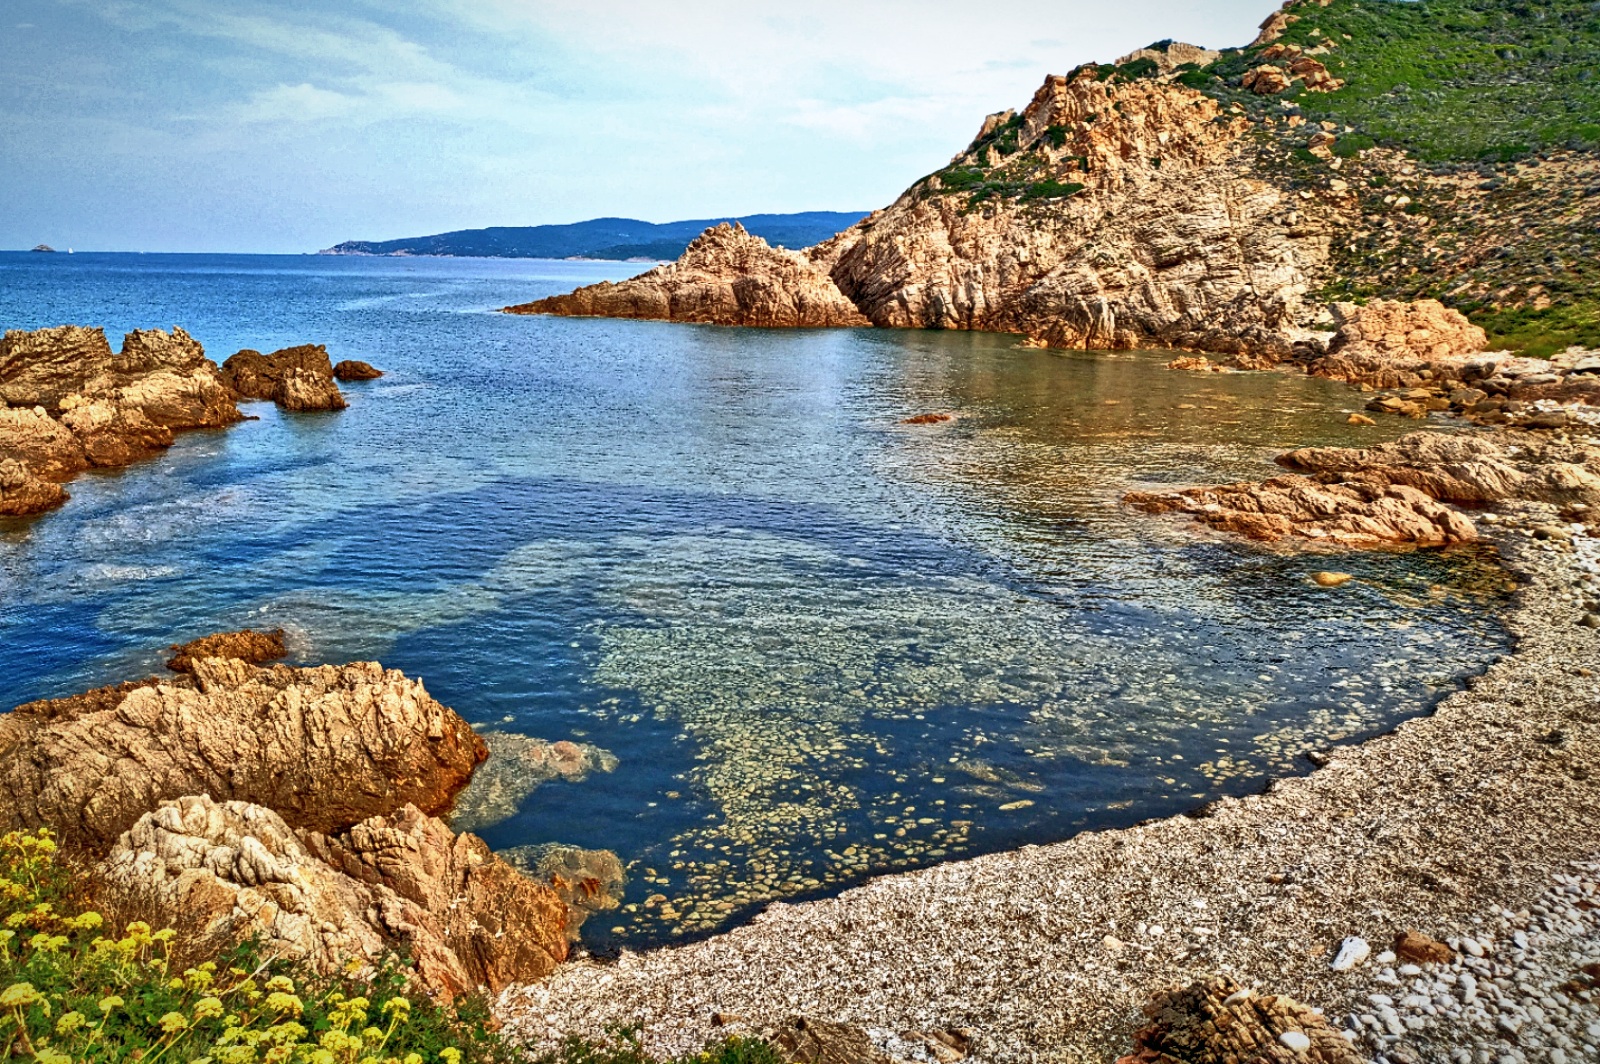 Pointe de la Corba'in fotoğrafı mavi saf su yüzey ile